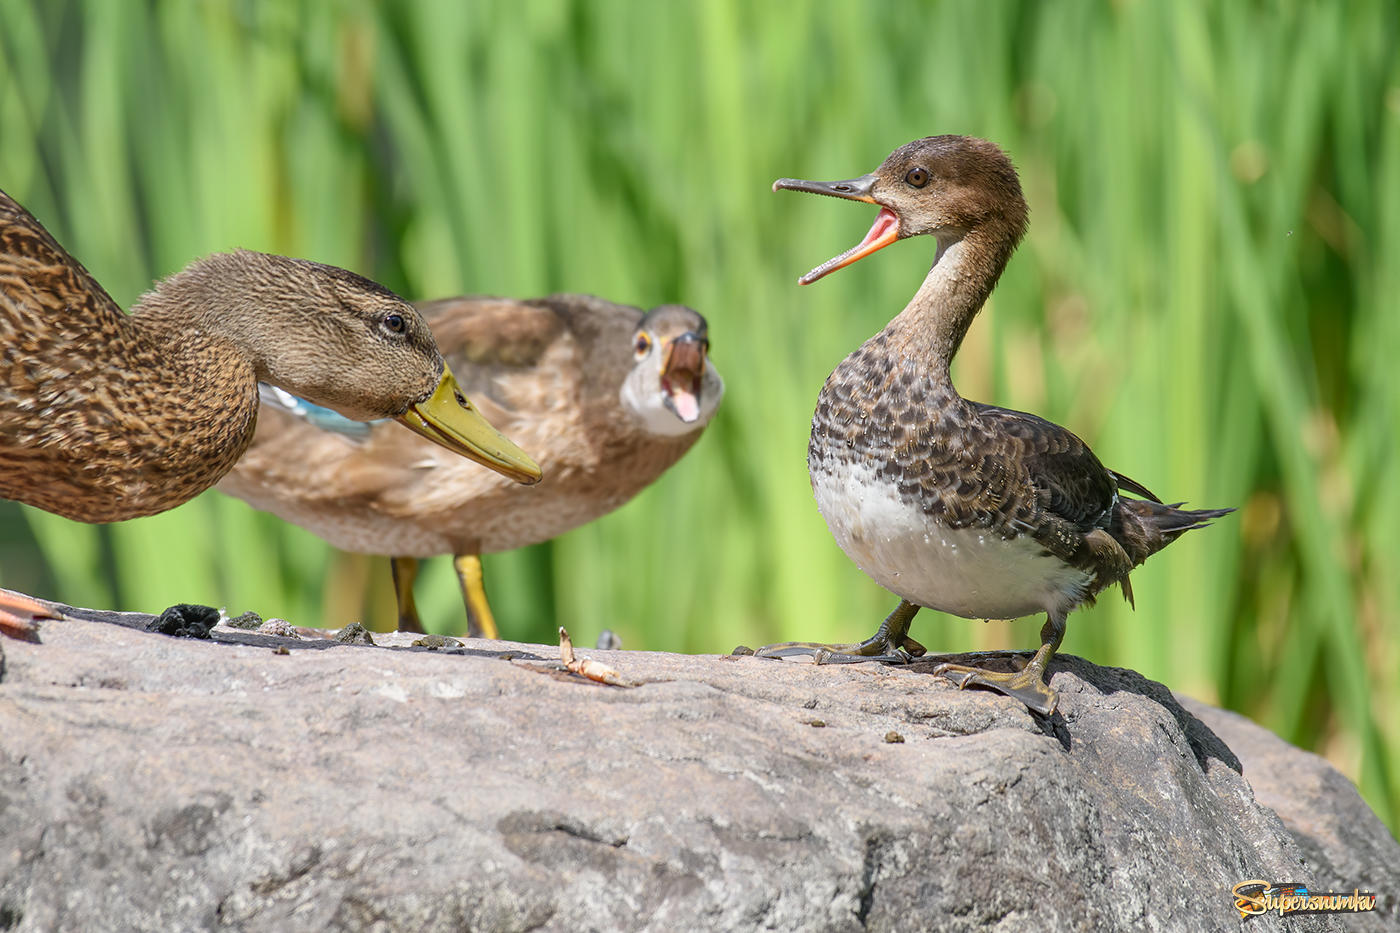 female showdown (from left to right: Mallard duck*Wood duck*Hooded merganser)